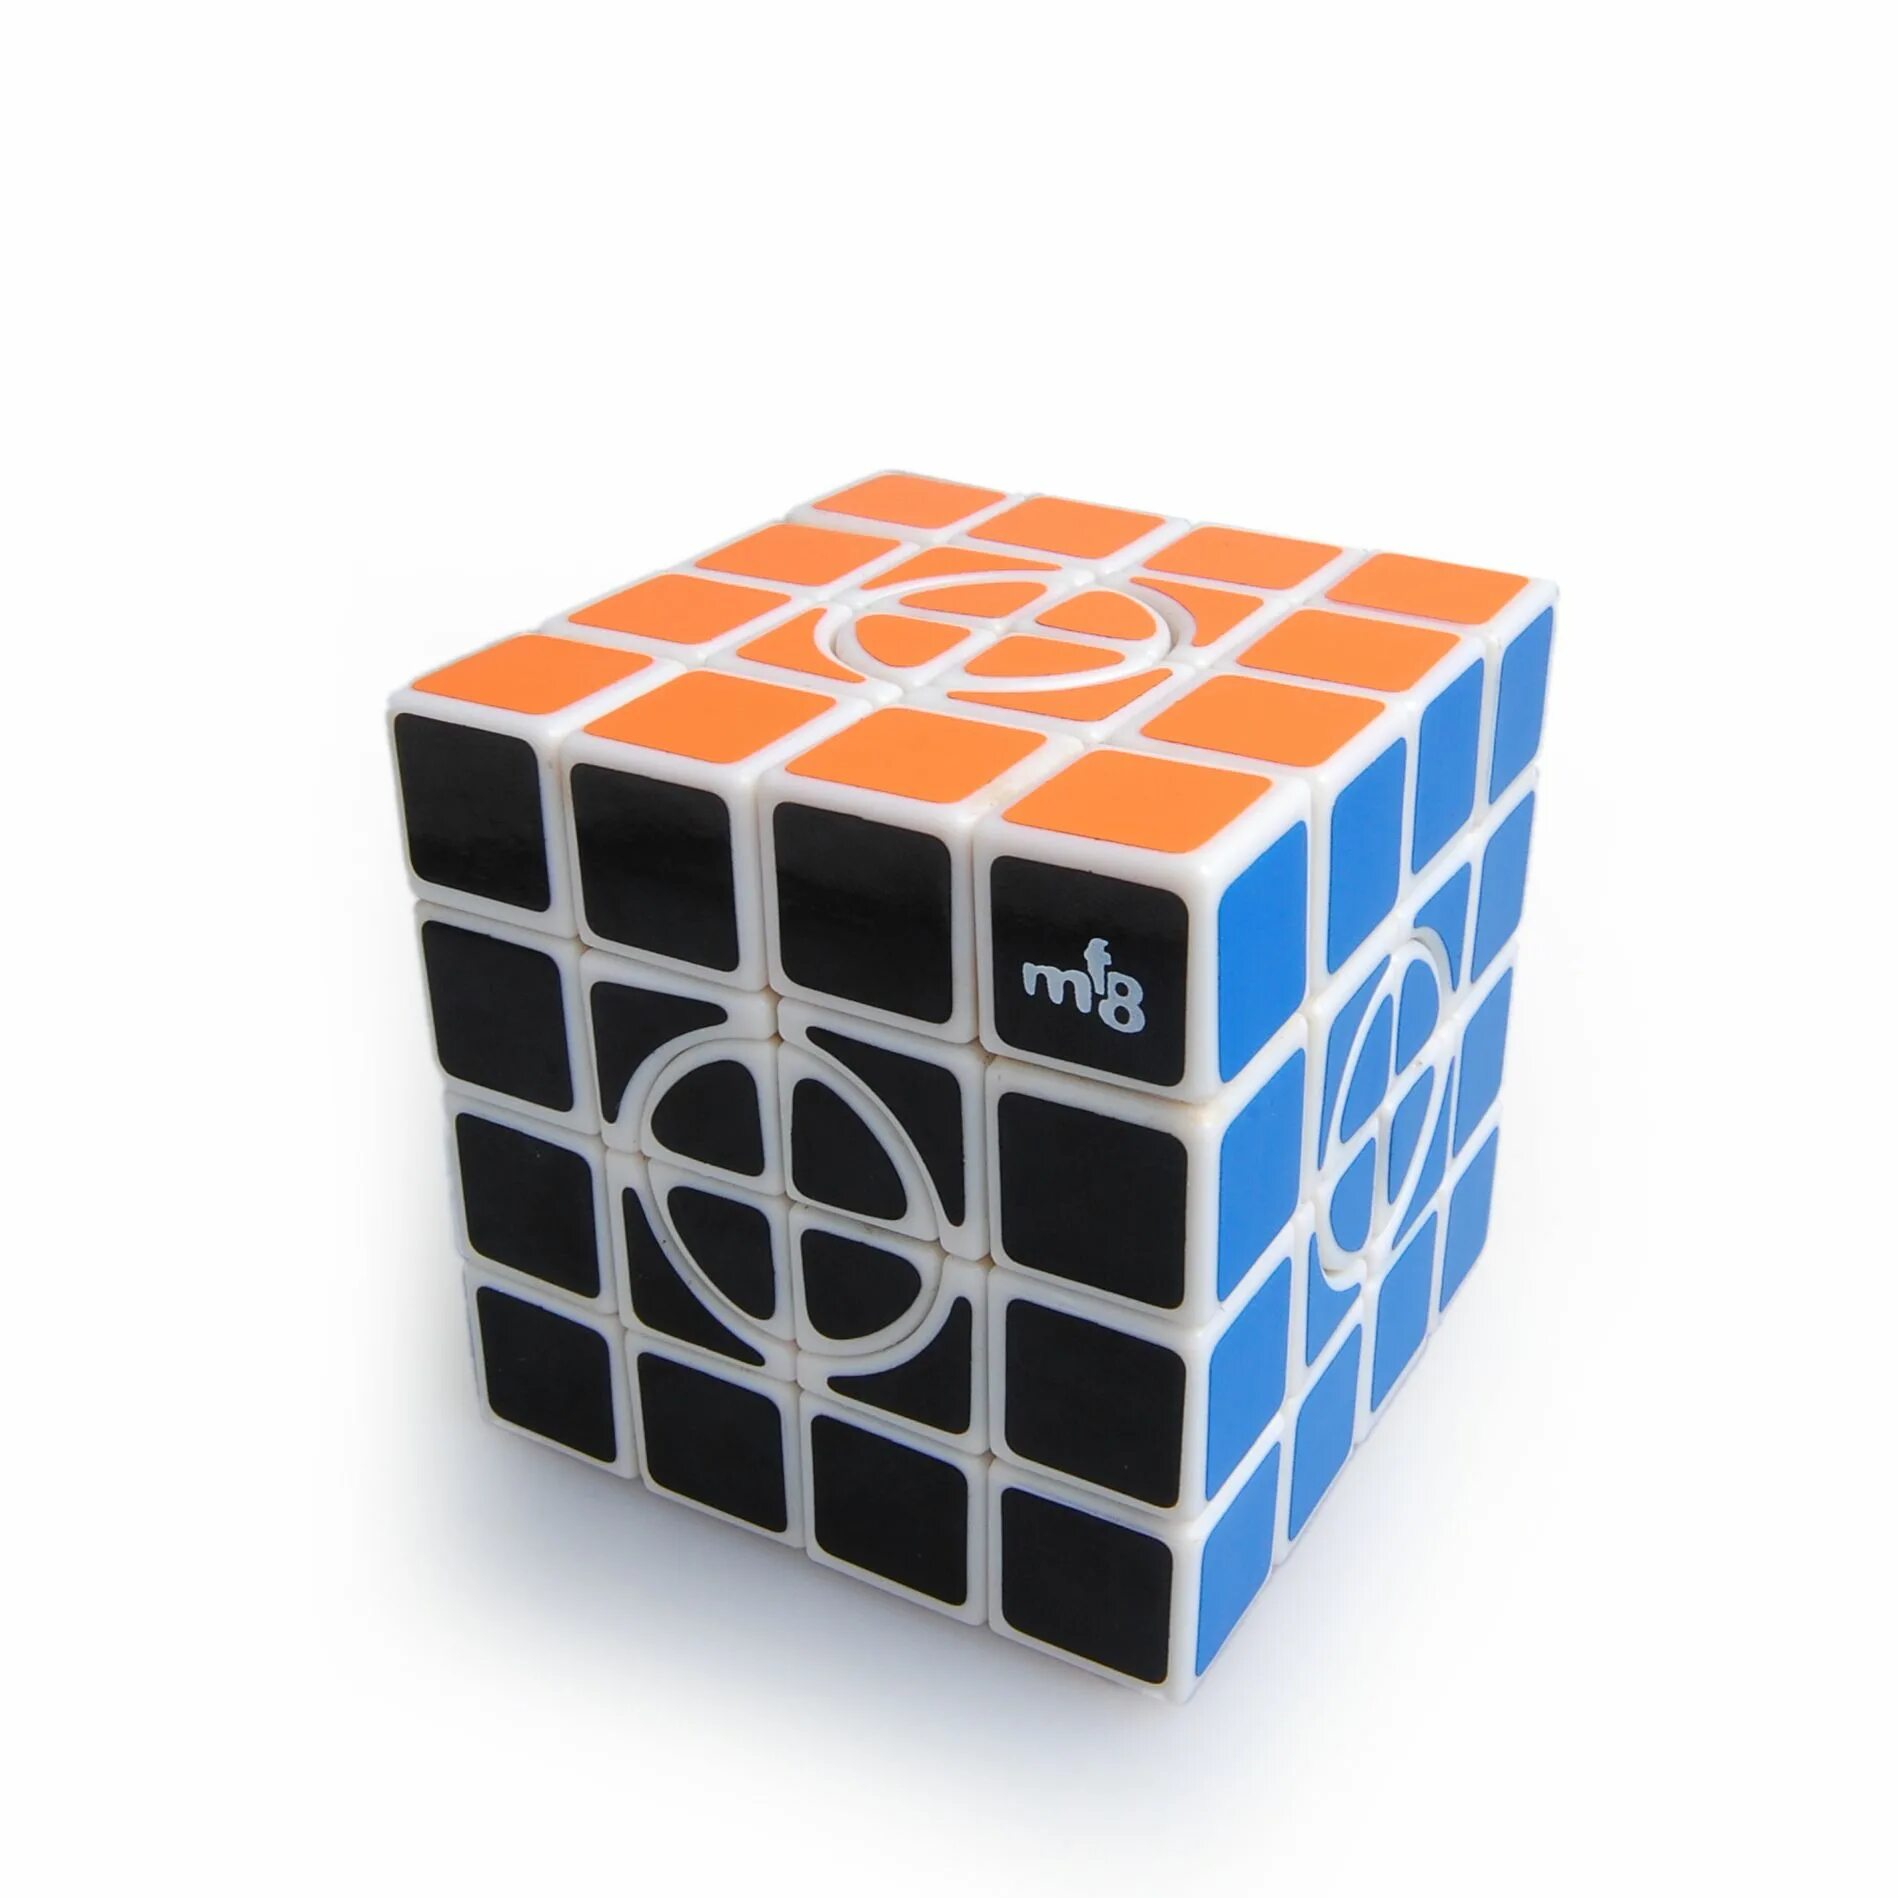 Cube 4pda. Cube mf8 AJ. Son-mum Cube 4x4 mf8. Ghost Cube 4x4. Dayan Cube.